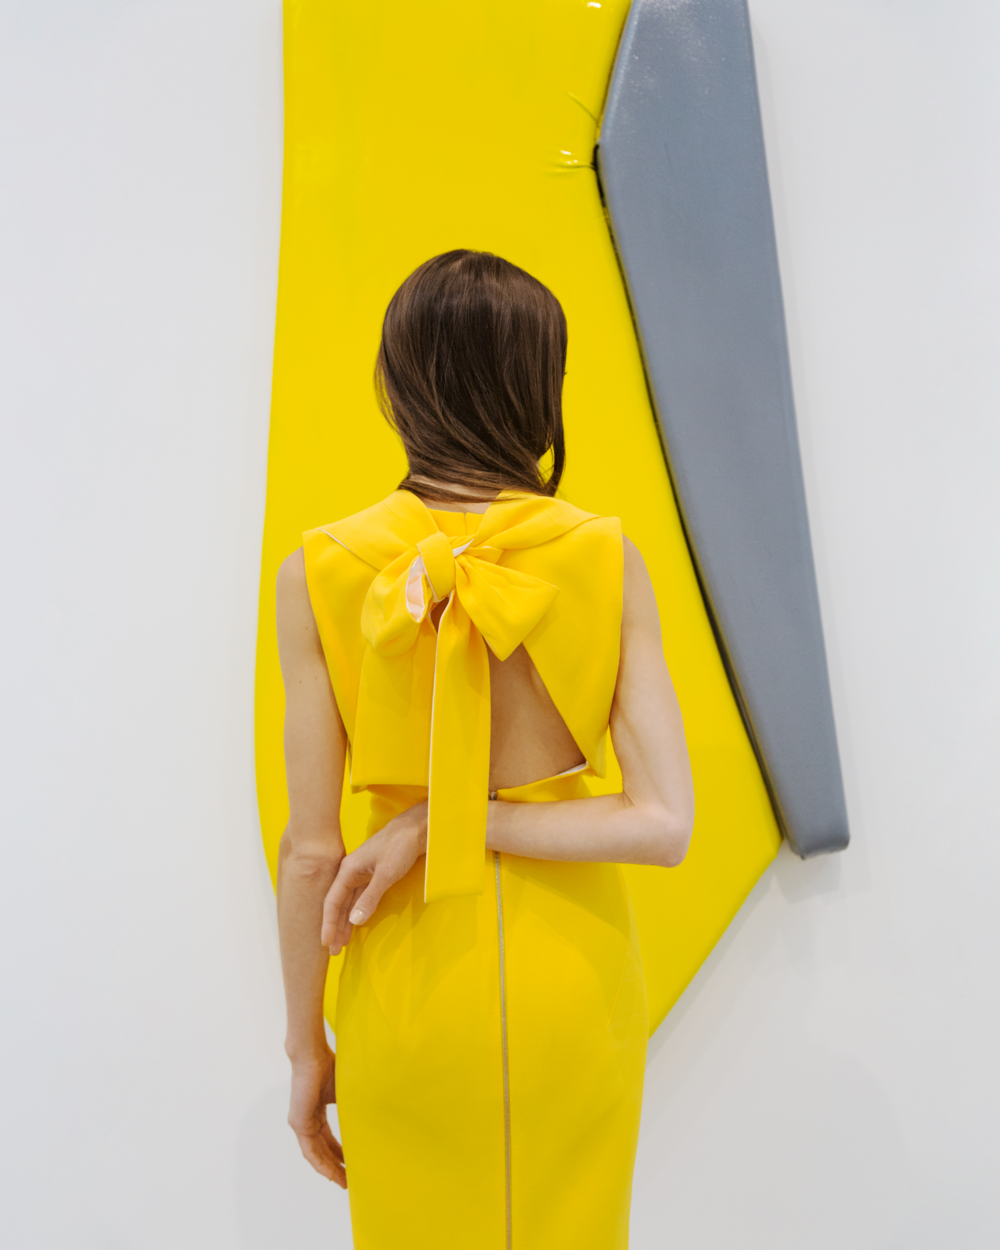 Pari Ehsan at Justin Adian - Skarstedt Gallery wearing Victoria Beckham, Photo by Tylor Hóu.